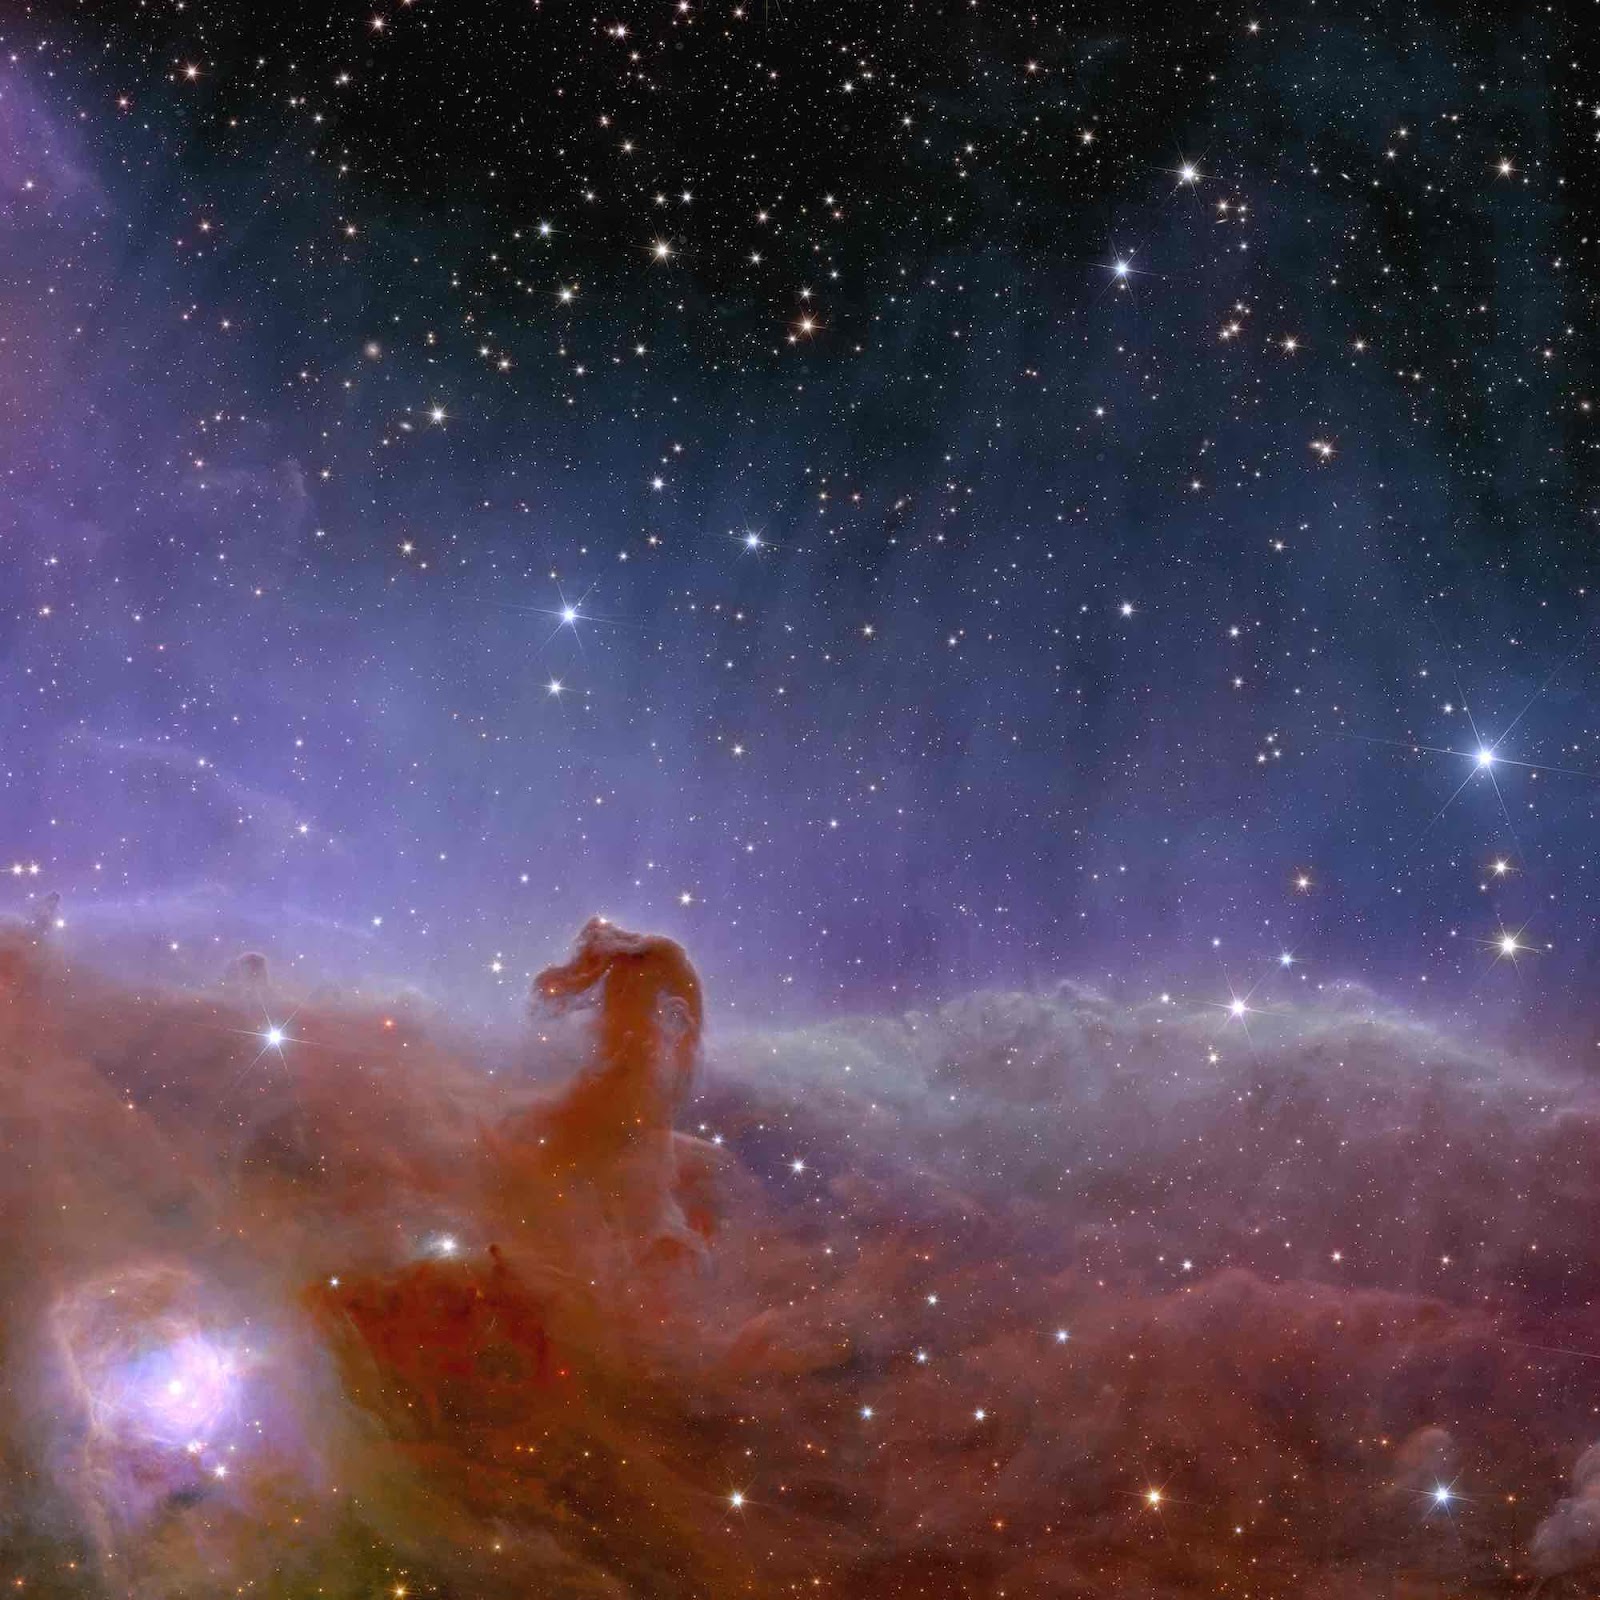 The Horsehead nebula in space.